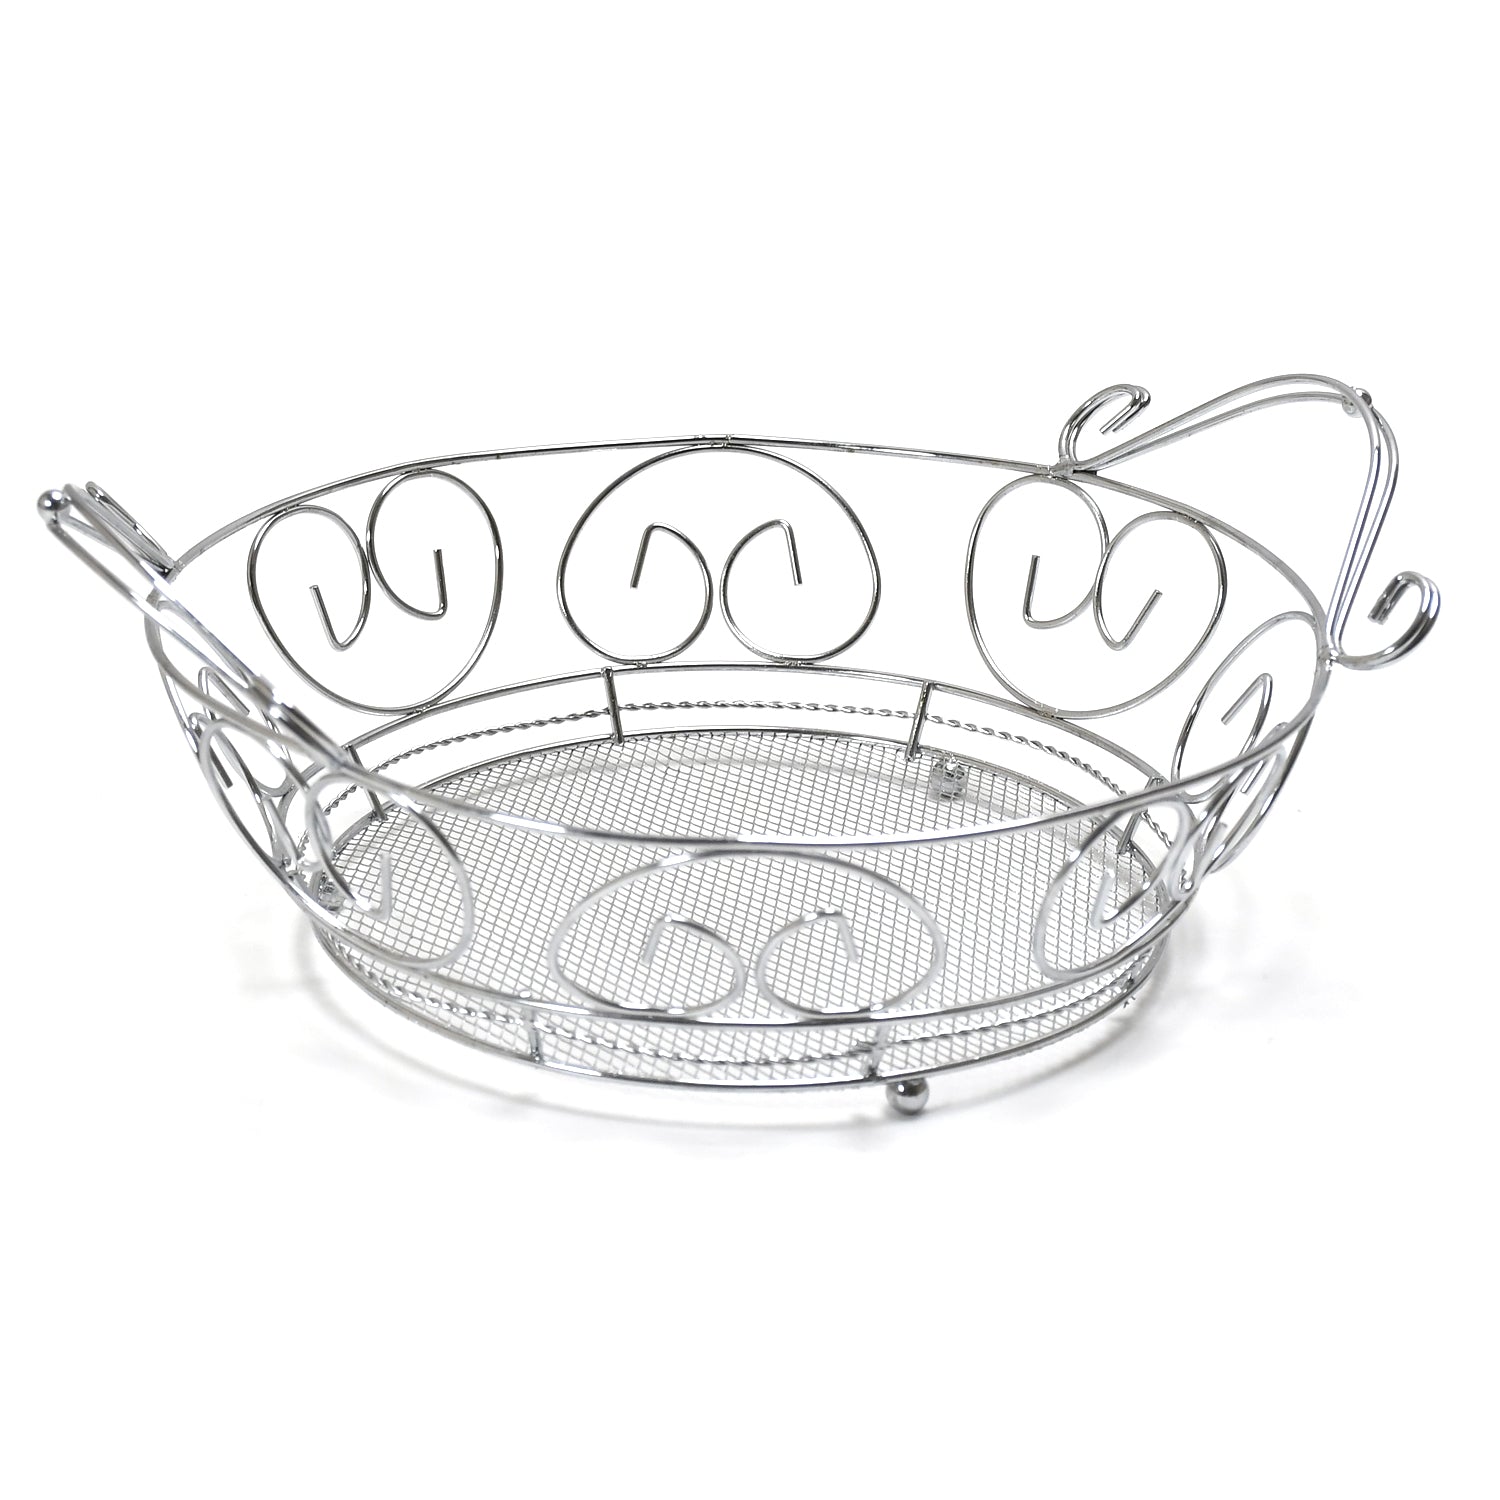 5267 Multipurpose  round shape Stainless Steel Modern Folding Fruit and Vegetable Basket (Silver, 8 Shapes) DeoDap